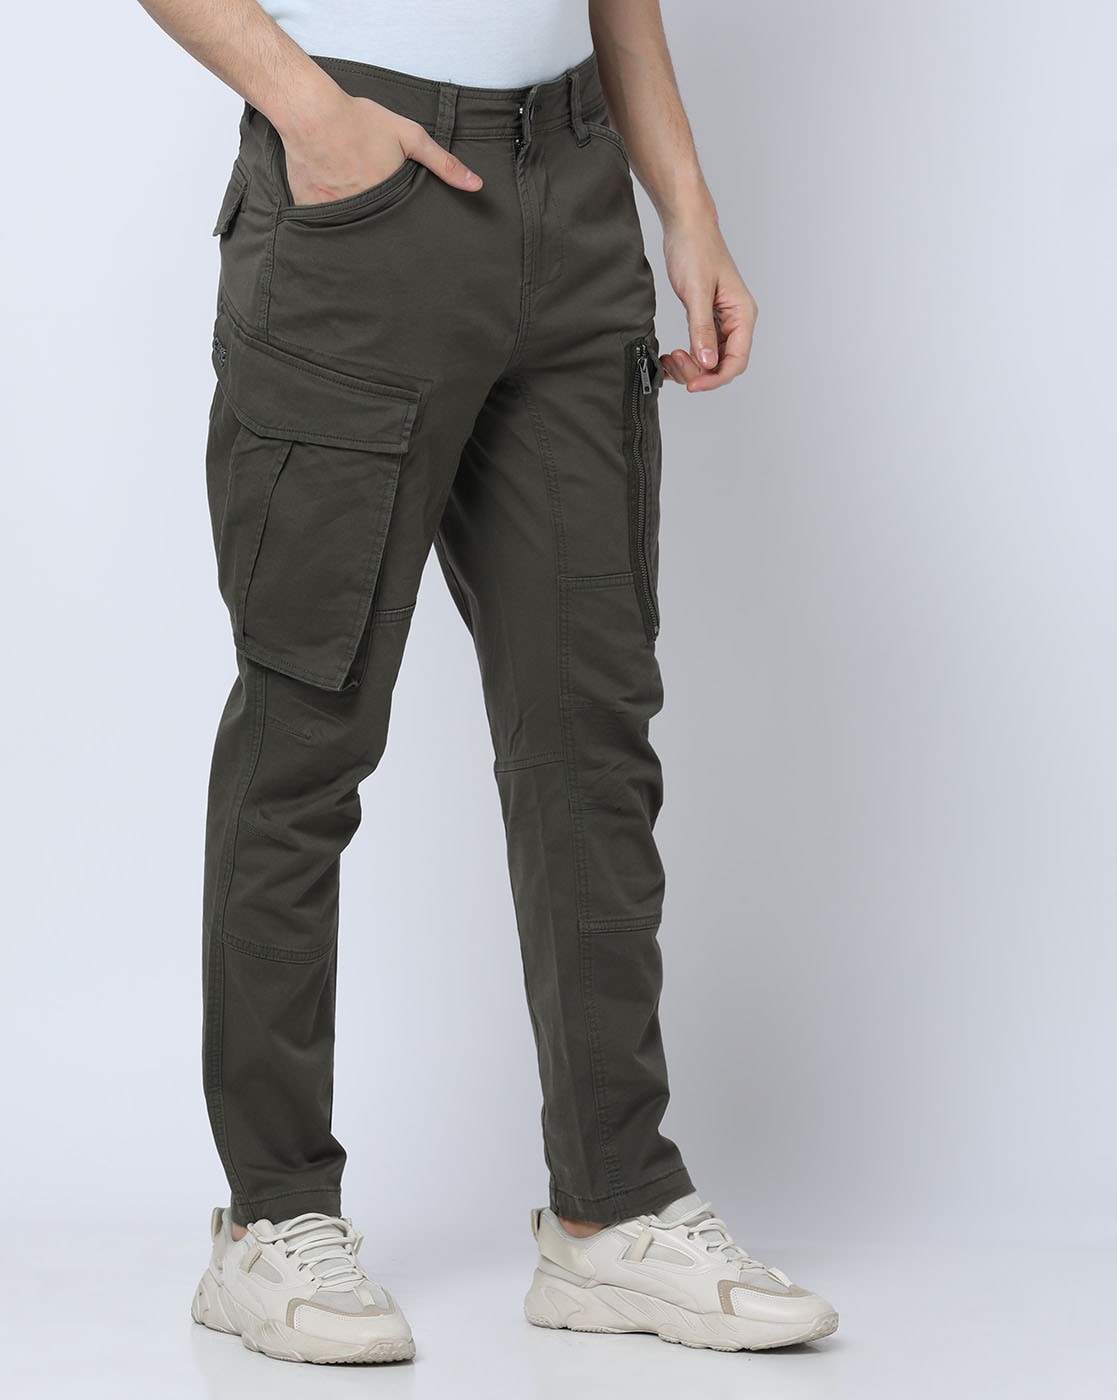 Green Cargo Pants for Women | Nordstrom